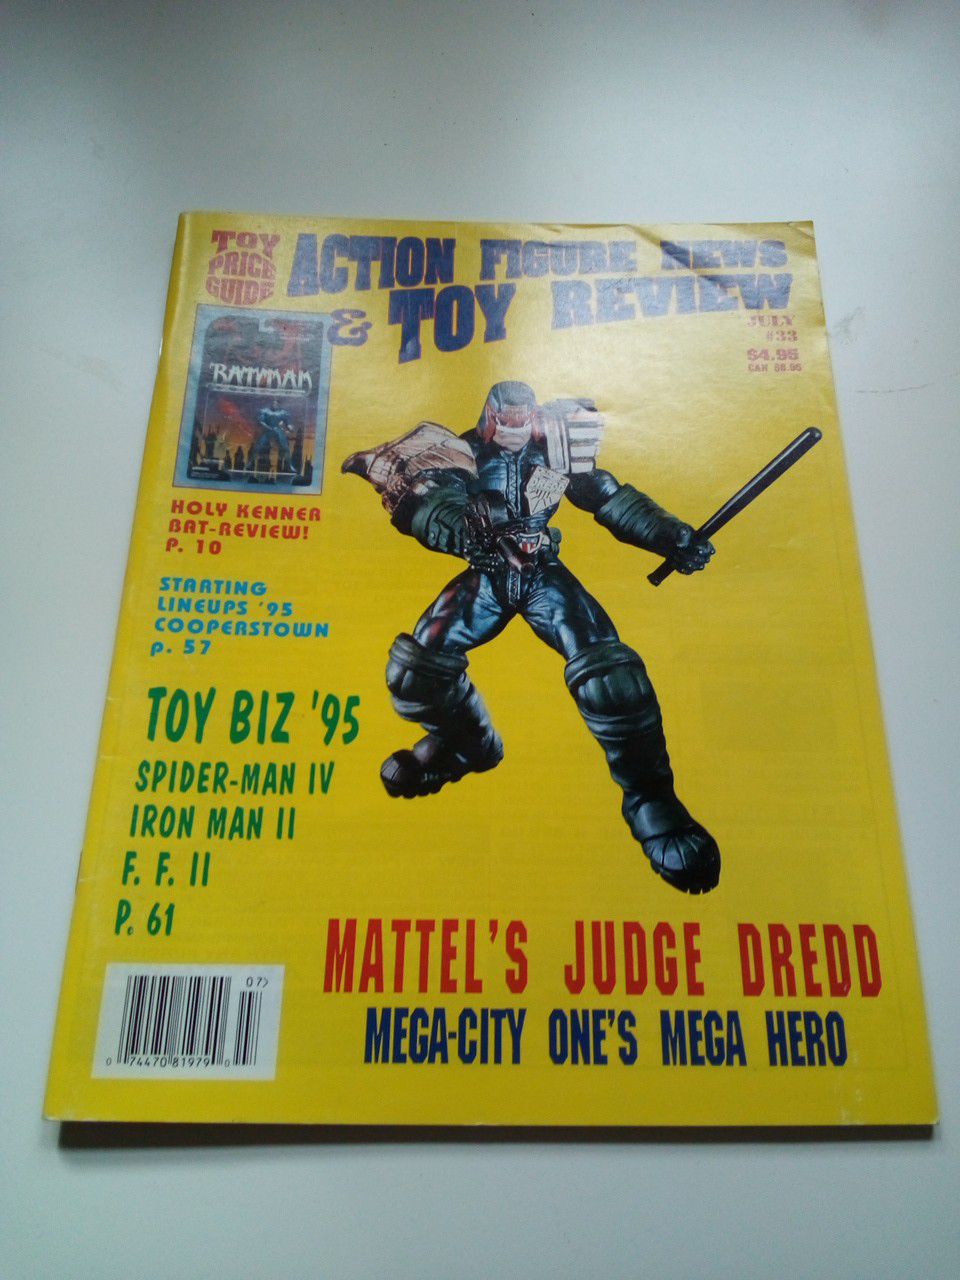 Vintage action figure news & toy review magazine/ July 1995/ Mattel's judge dress/ mega- city one' s mega hero/ holy Jenner bat review!